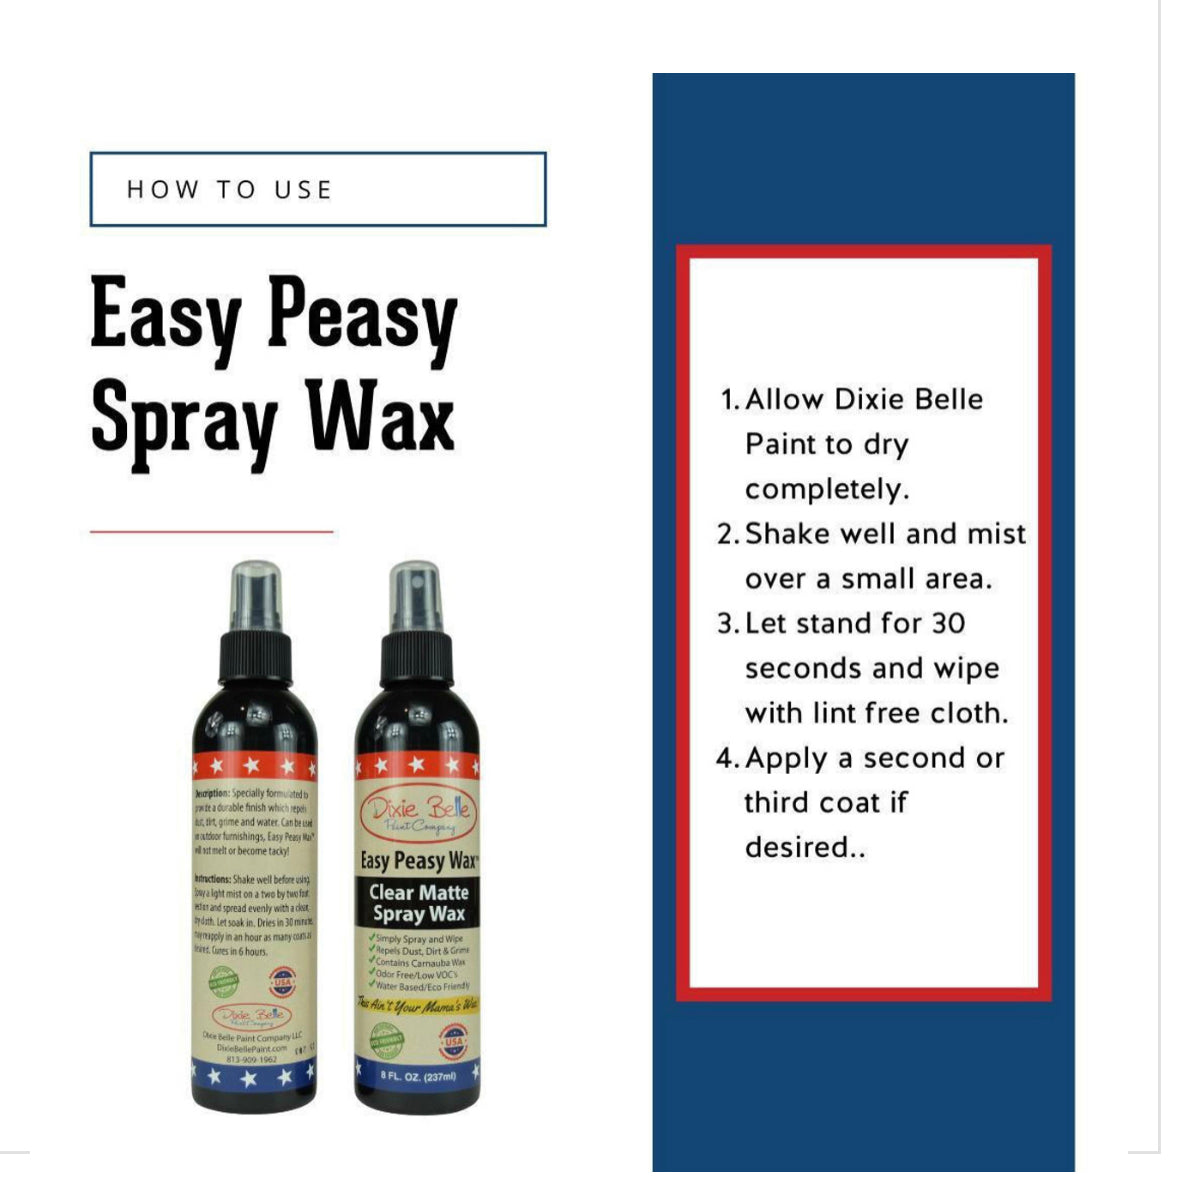 Easy Peasy Spray Wax by Dixie Belle